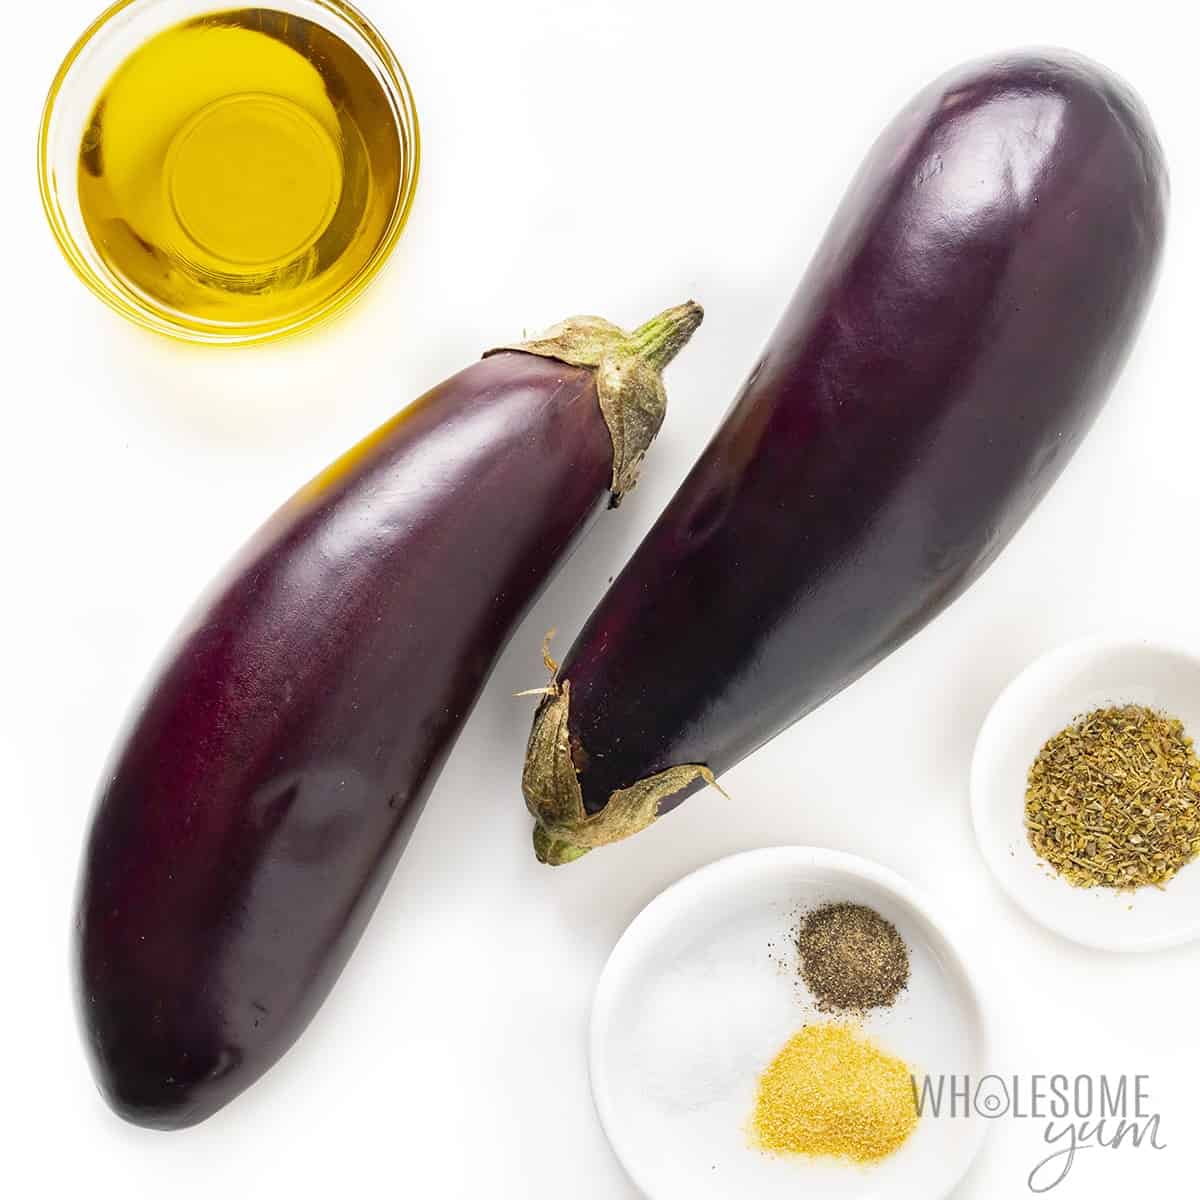 Grilled eggplant recipe ingredients.